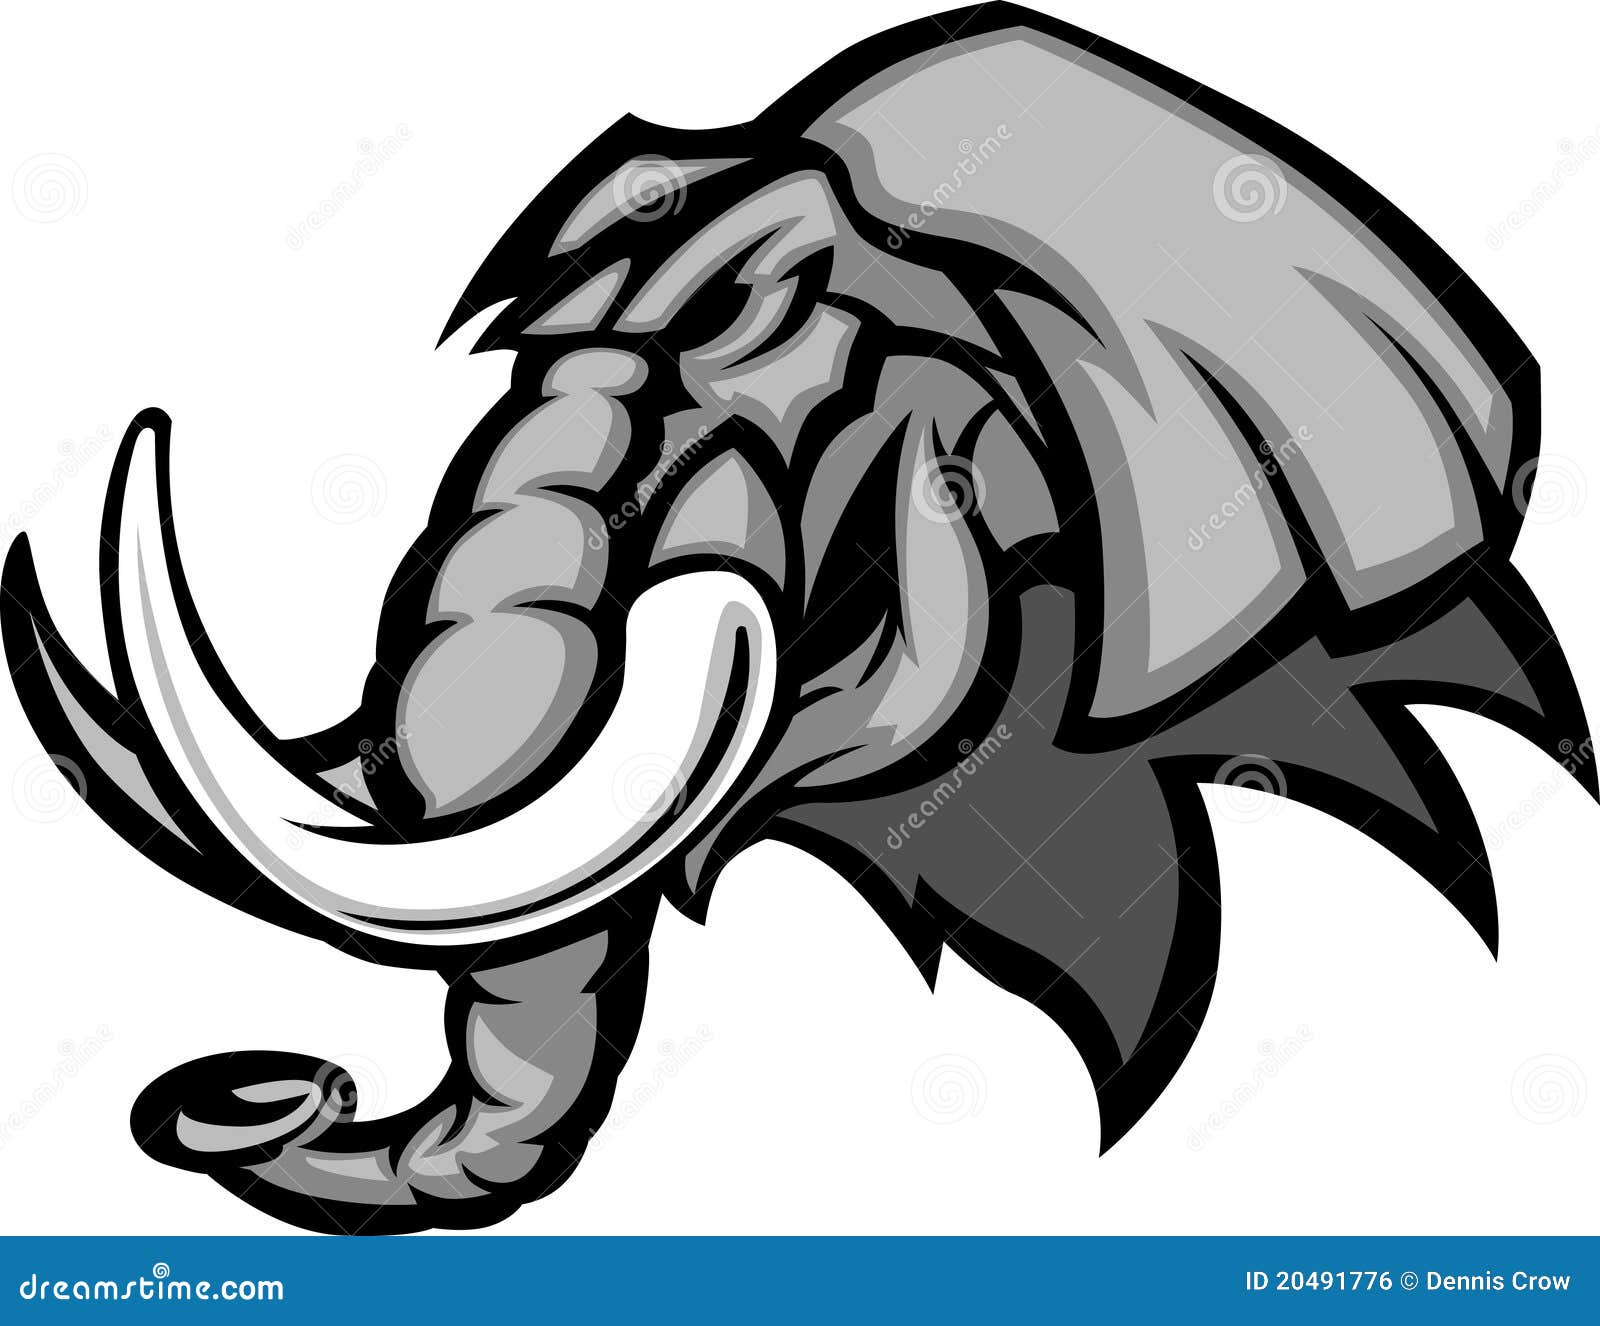 Elephant Mascot Head Vector Graphic Royalty Free Stock ...